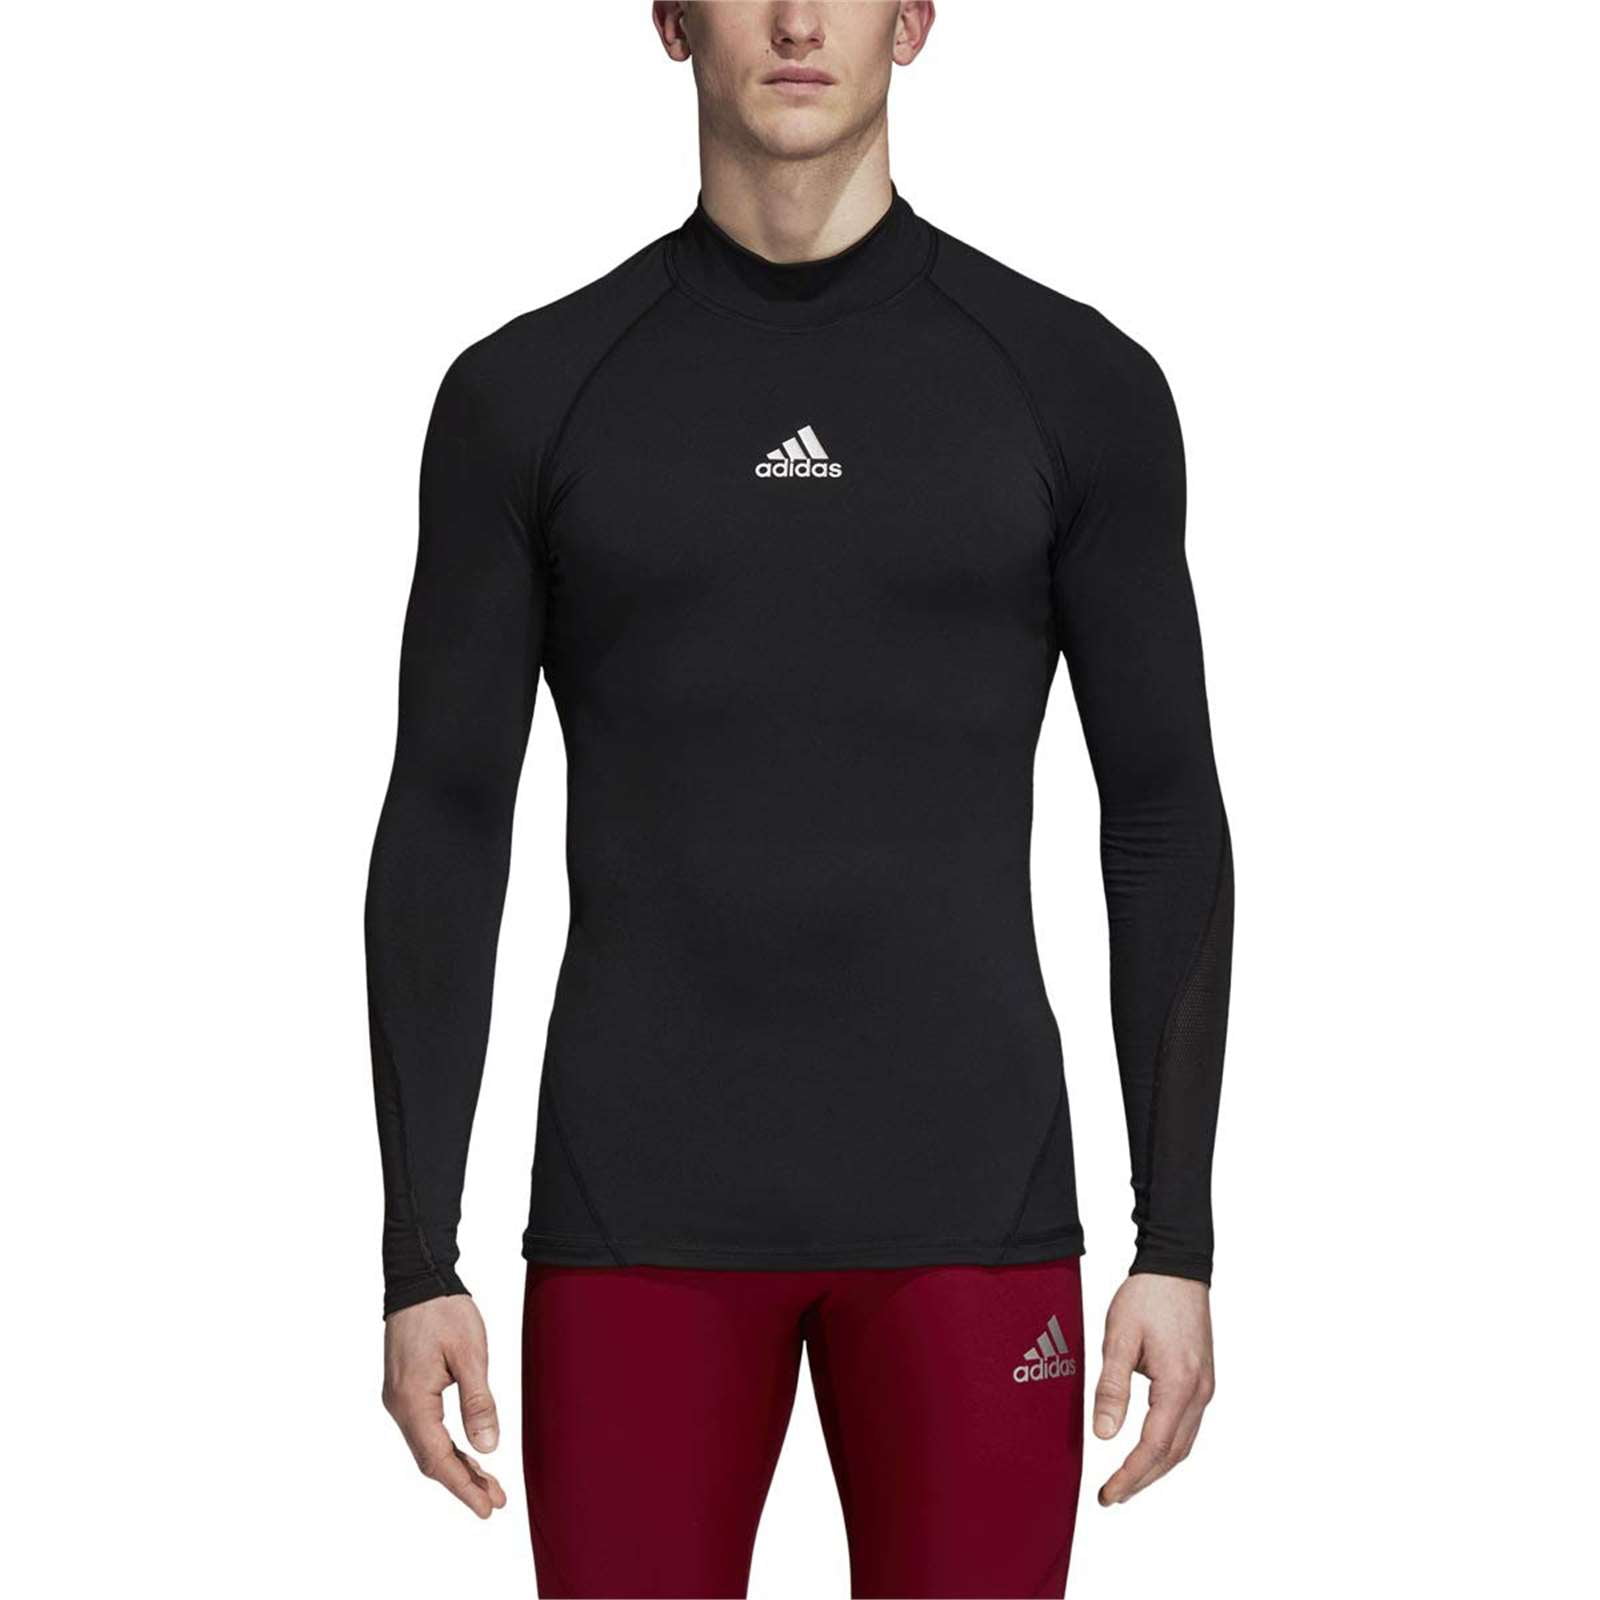 Adidas - Adidas Mens Athletic Alphaskin Sport Long Sleeve Climawarm T ...